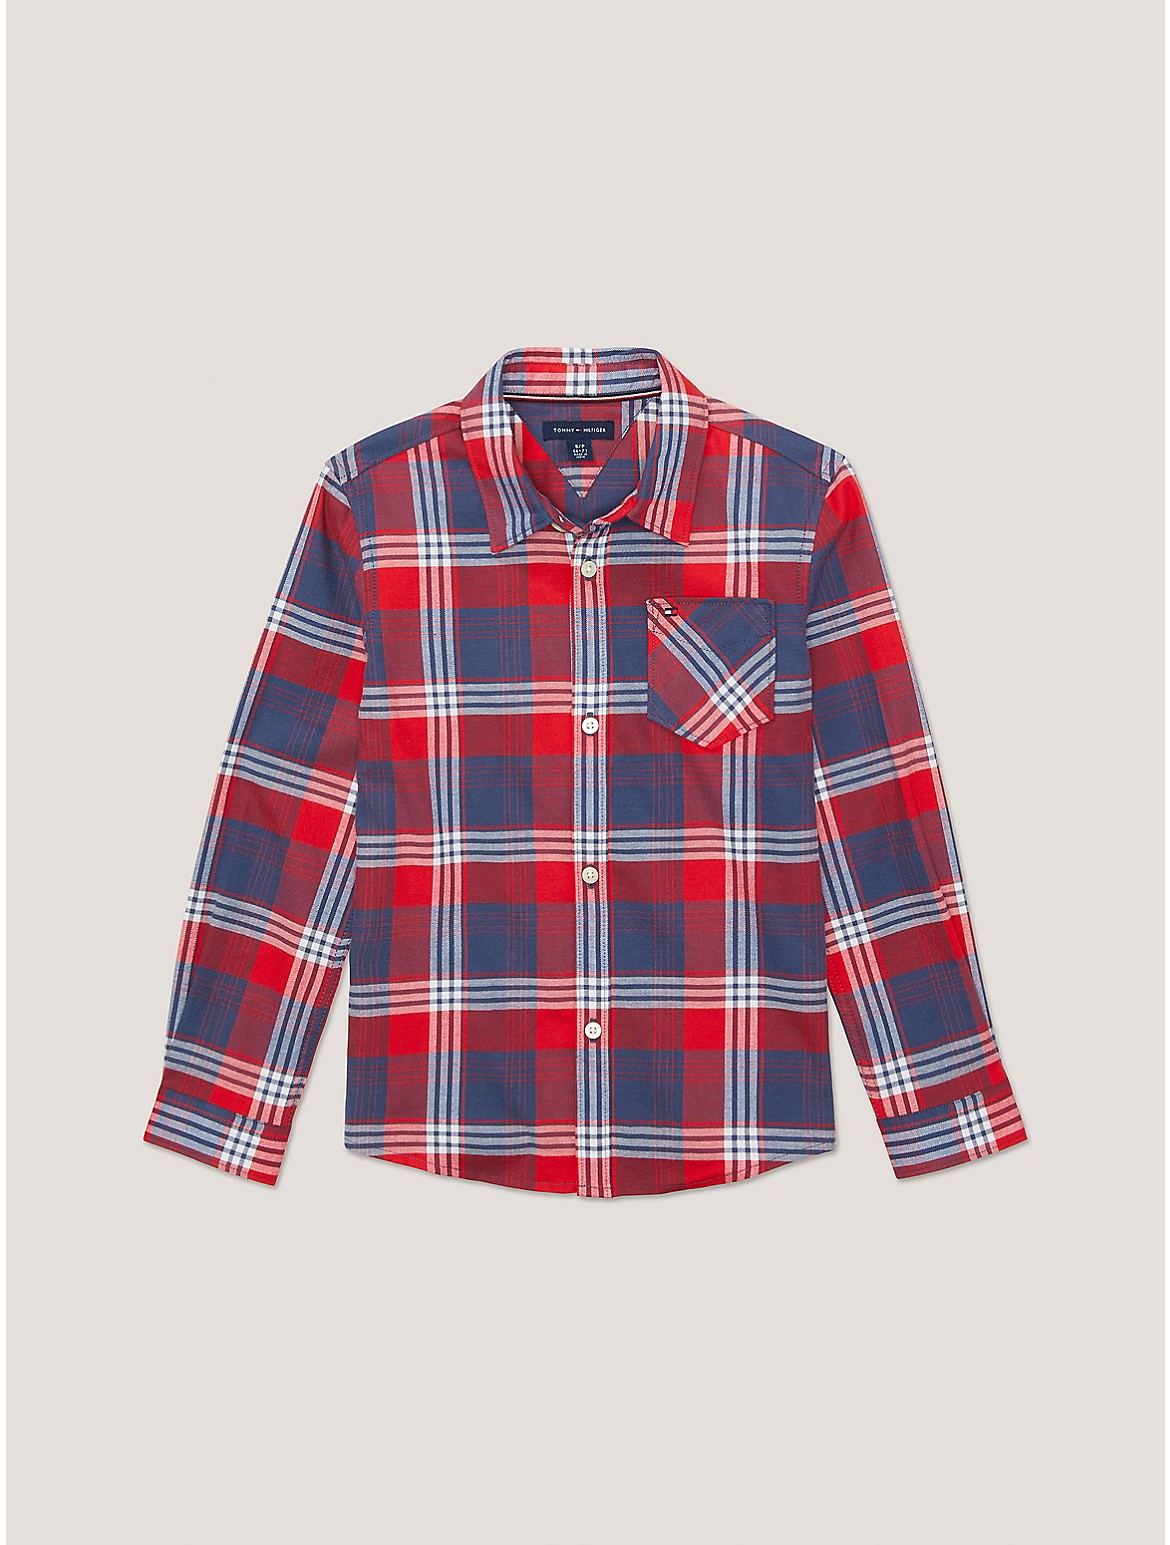 Tommy Hilfiger Boys' Kids' Plaid Shirt - Red - M